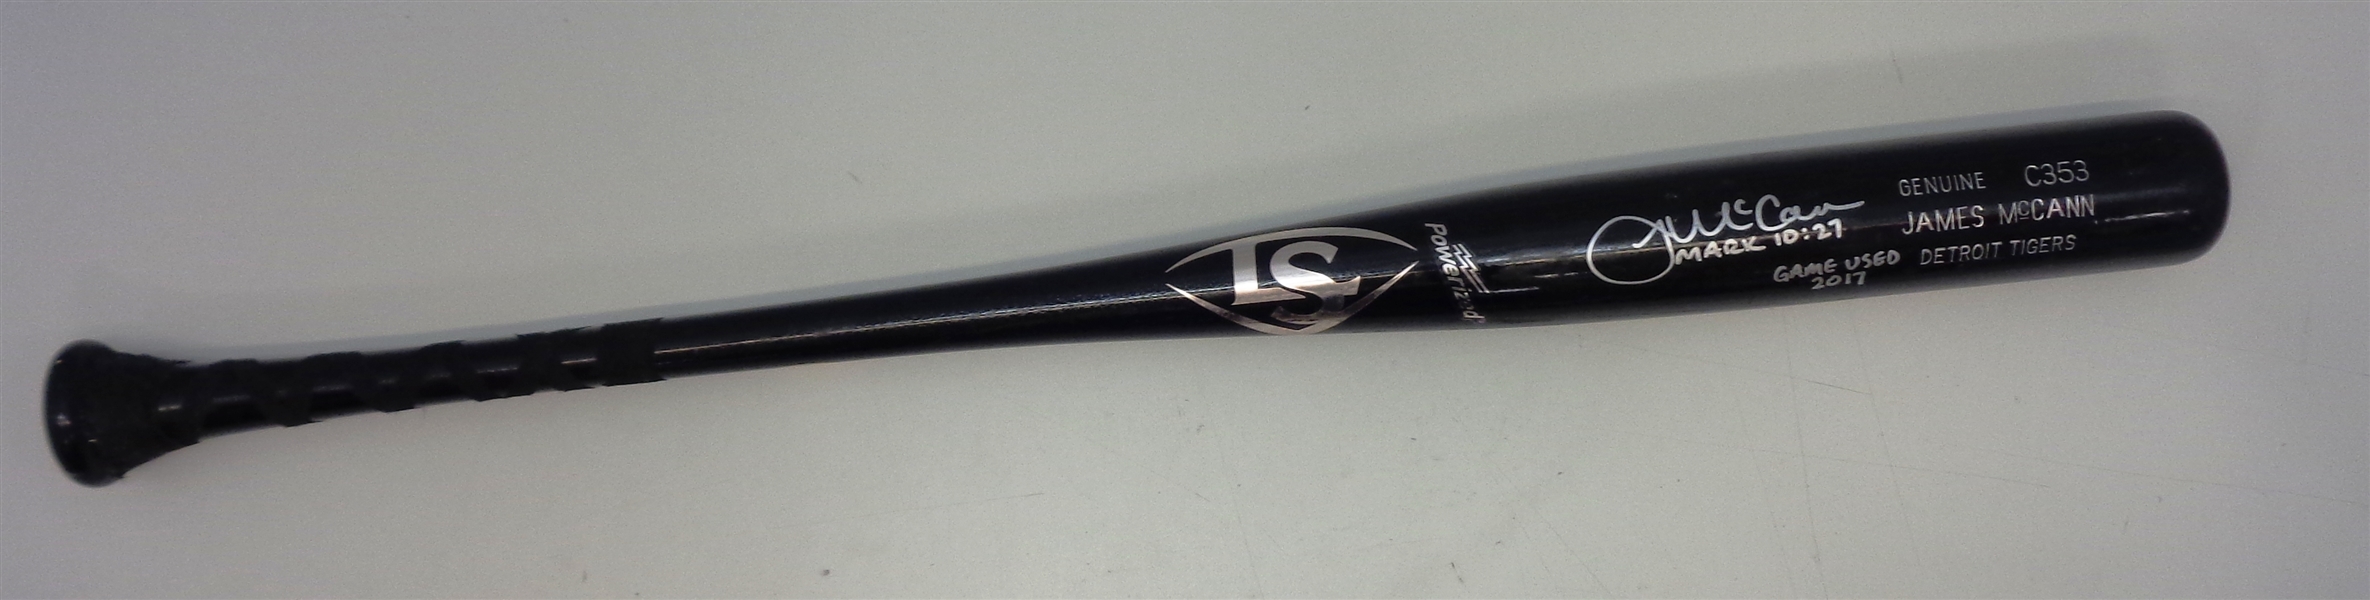 James McCann Game Used & Autographed 2017 Louisville Slugger Bat